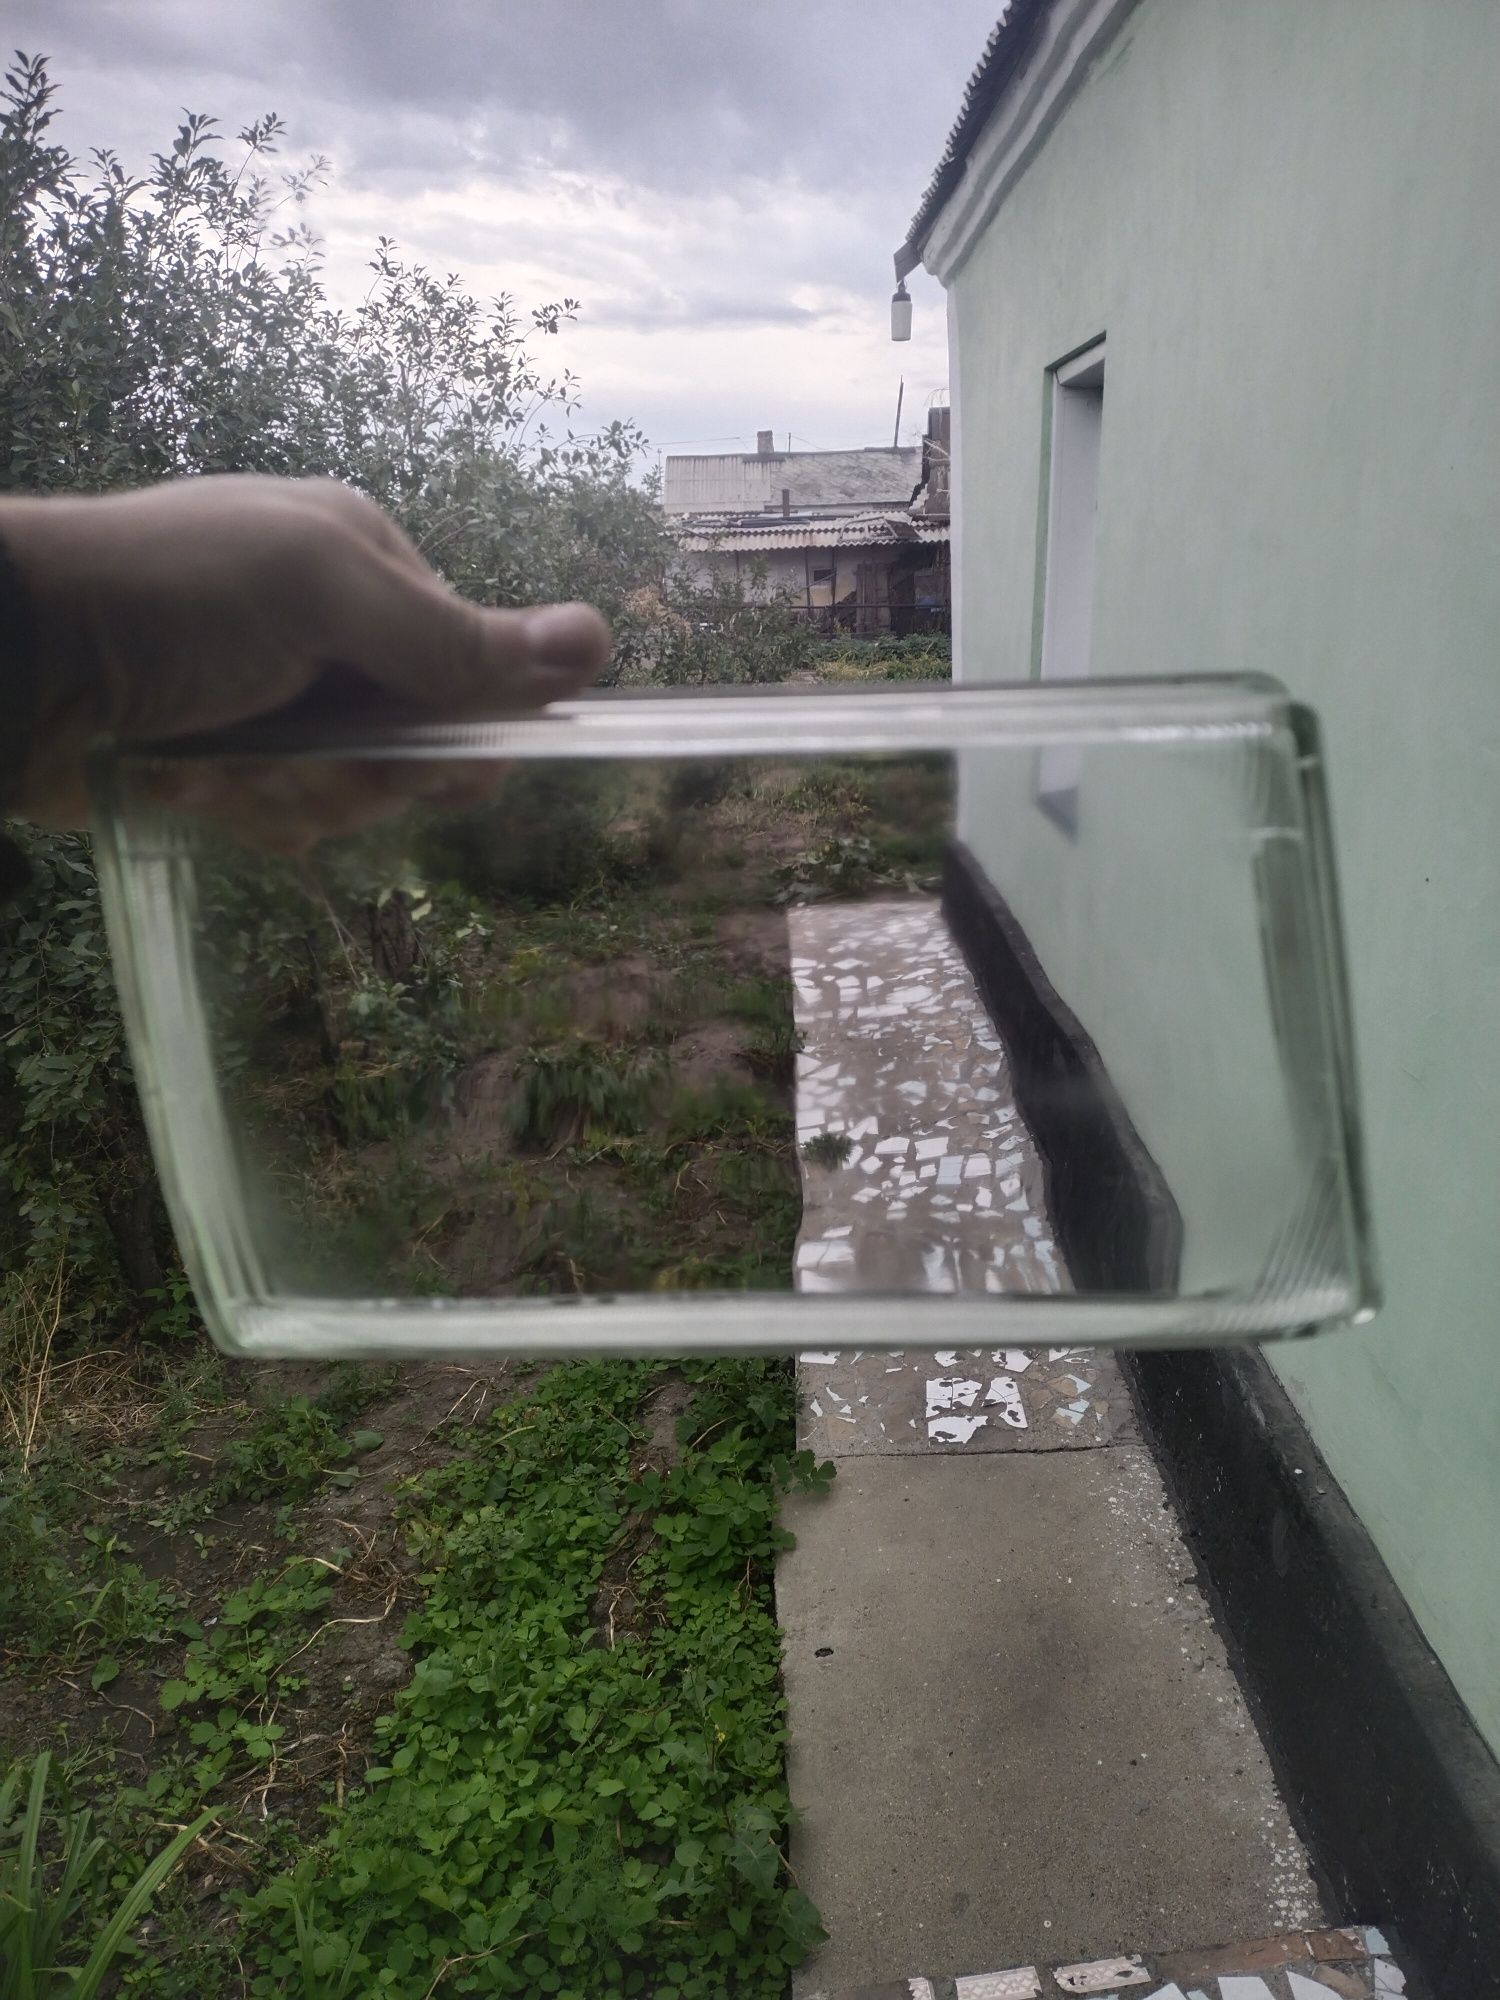 Сниму рифление с фар, стекла под линзу, шлифовка стекол фар